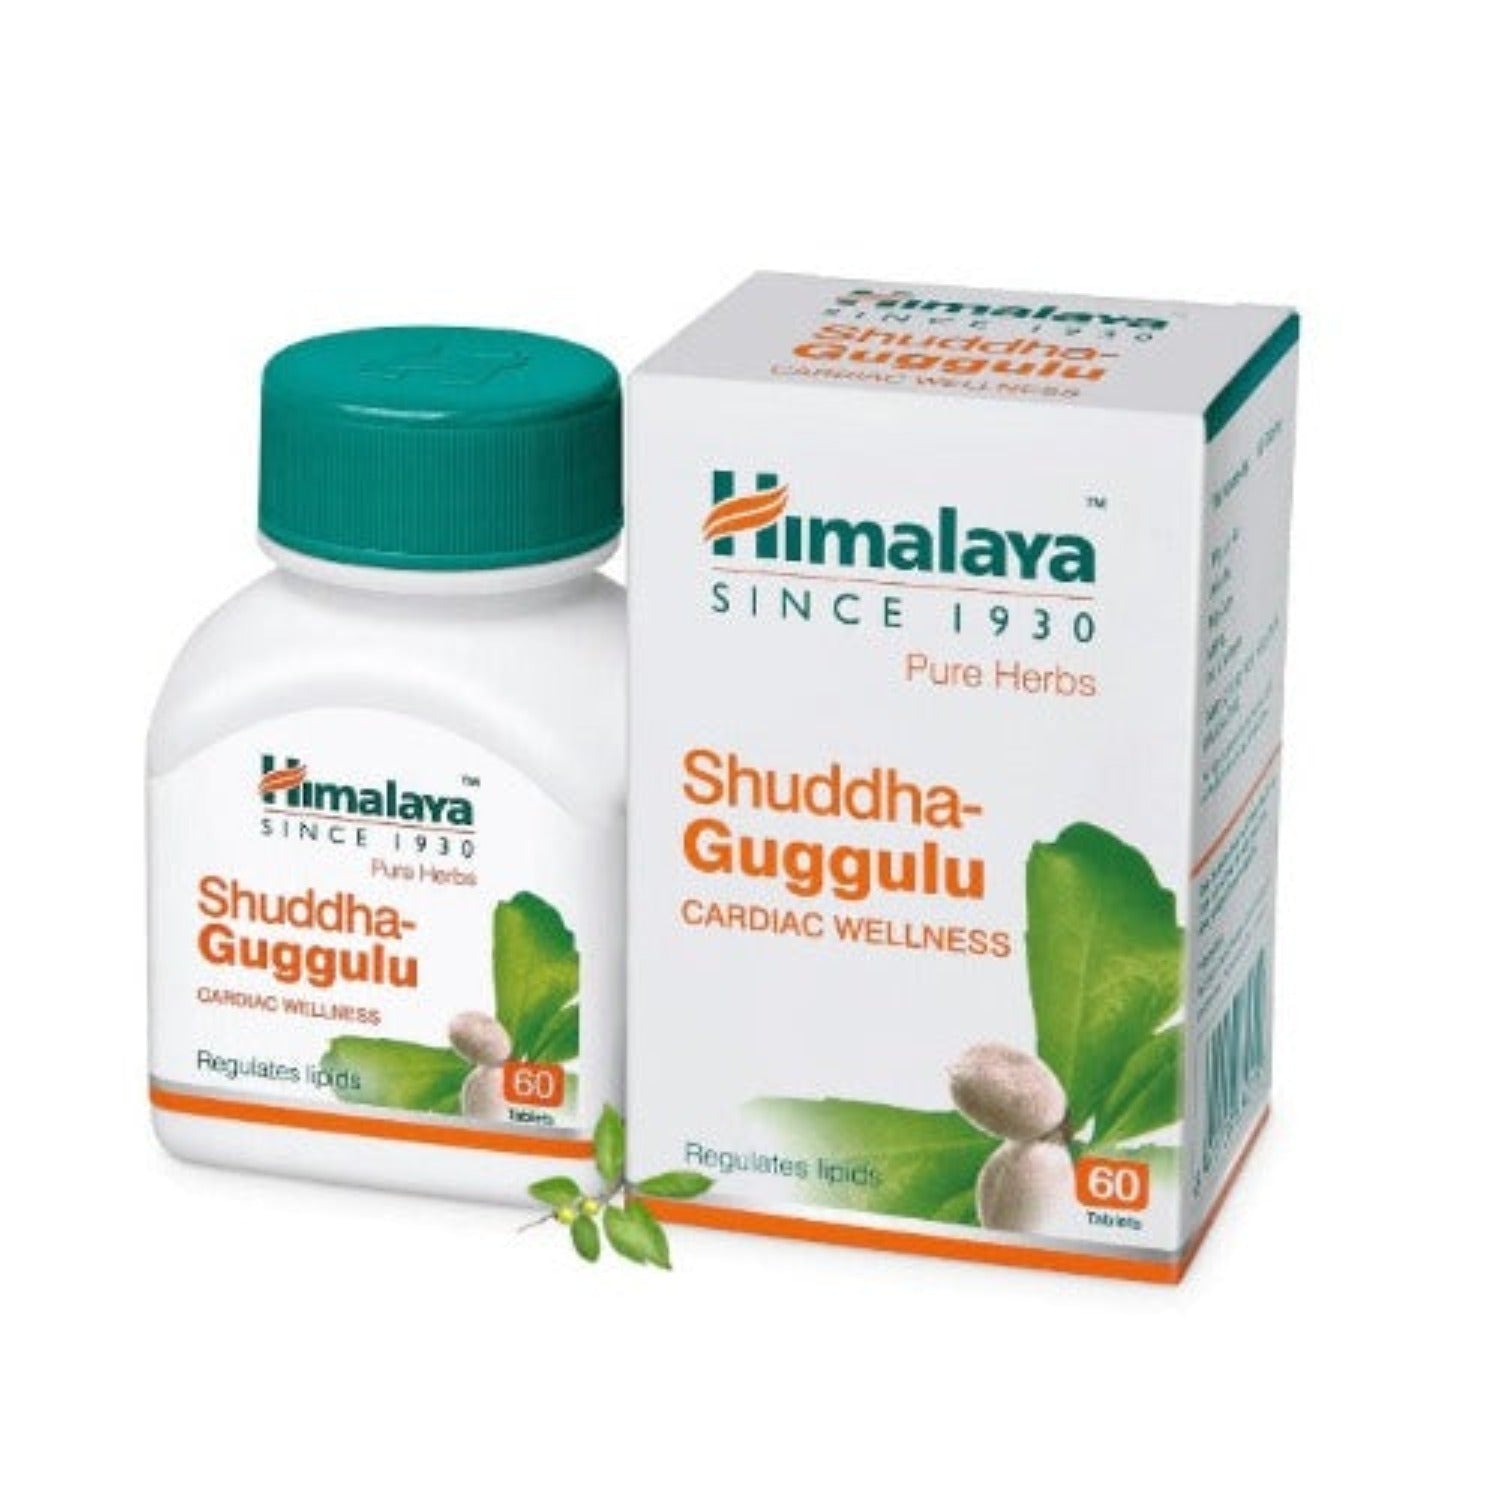 Himalaya Pure Herbs Cardiac Wellness Herbal Ayurvedic Shuddha-Guggulu Regulates Lipids 60 Tablets